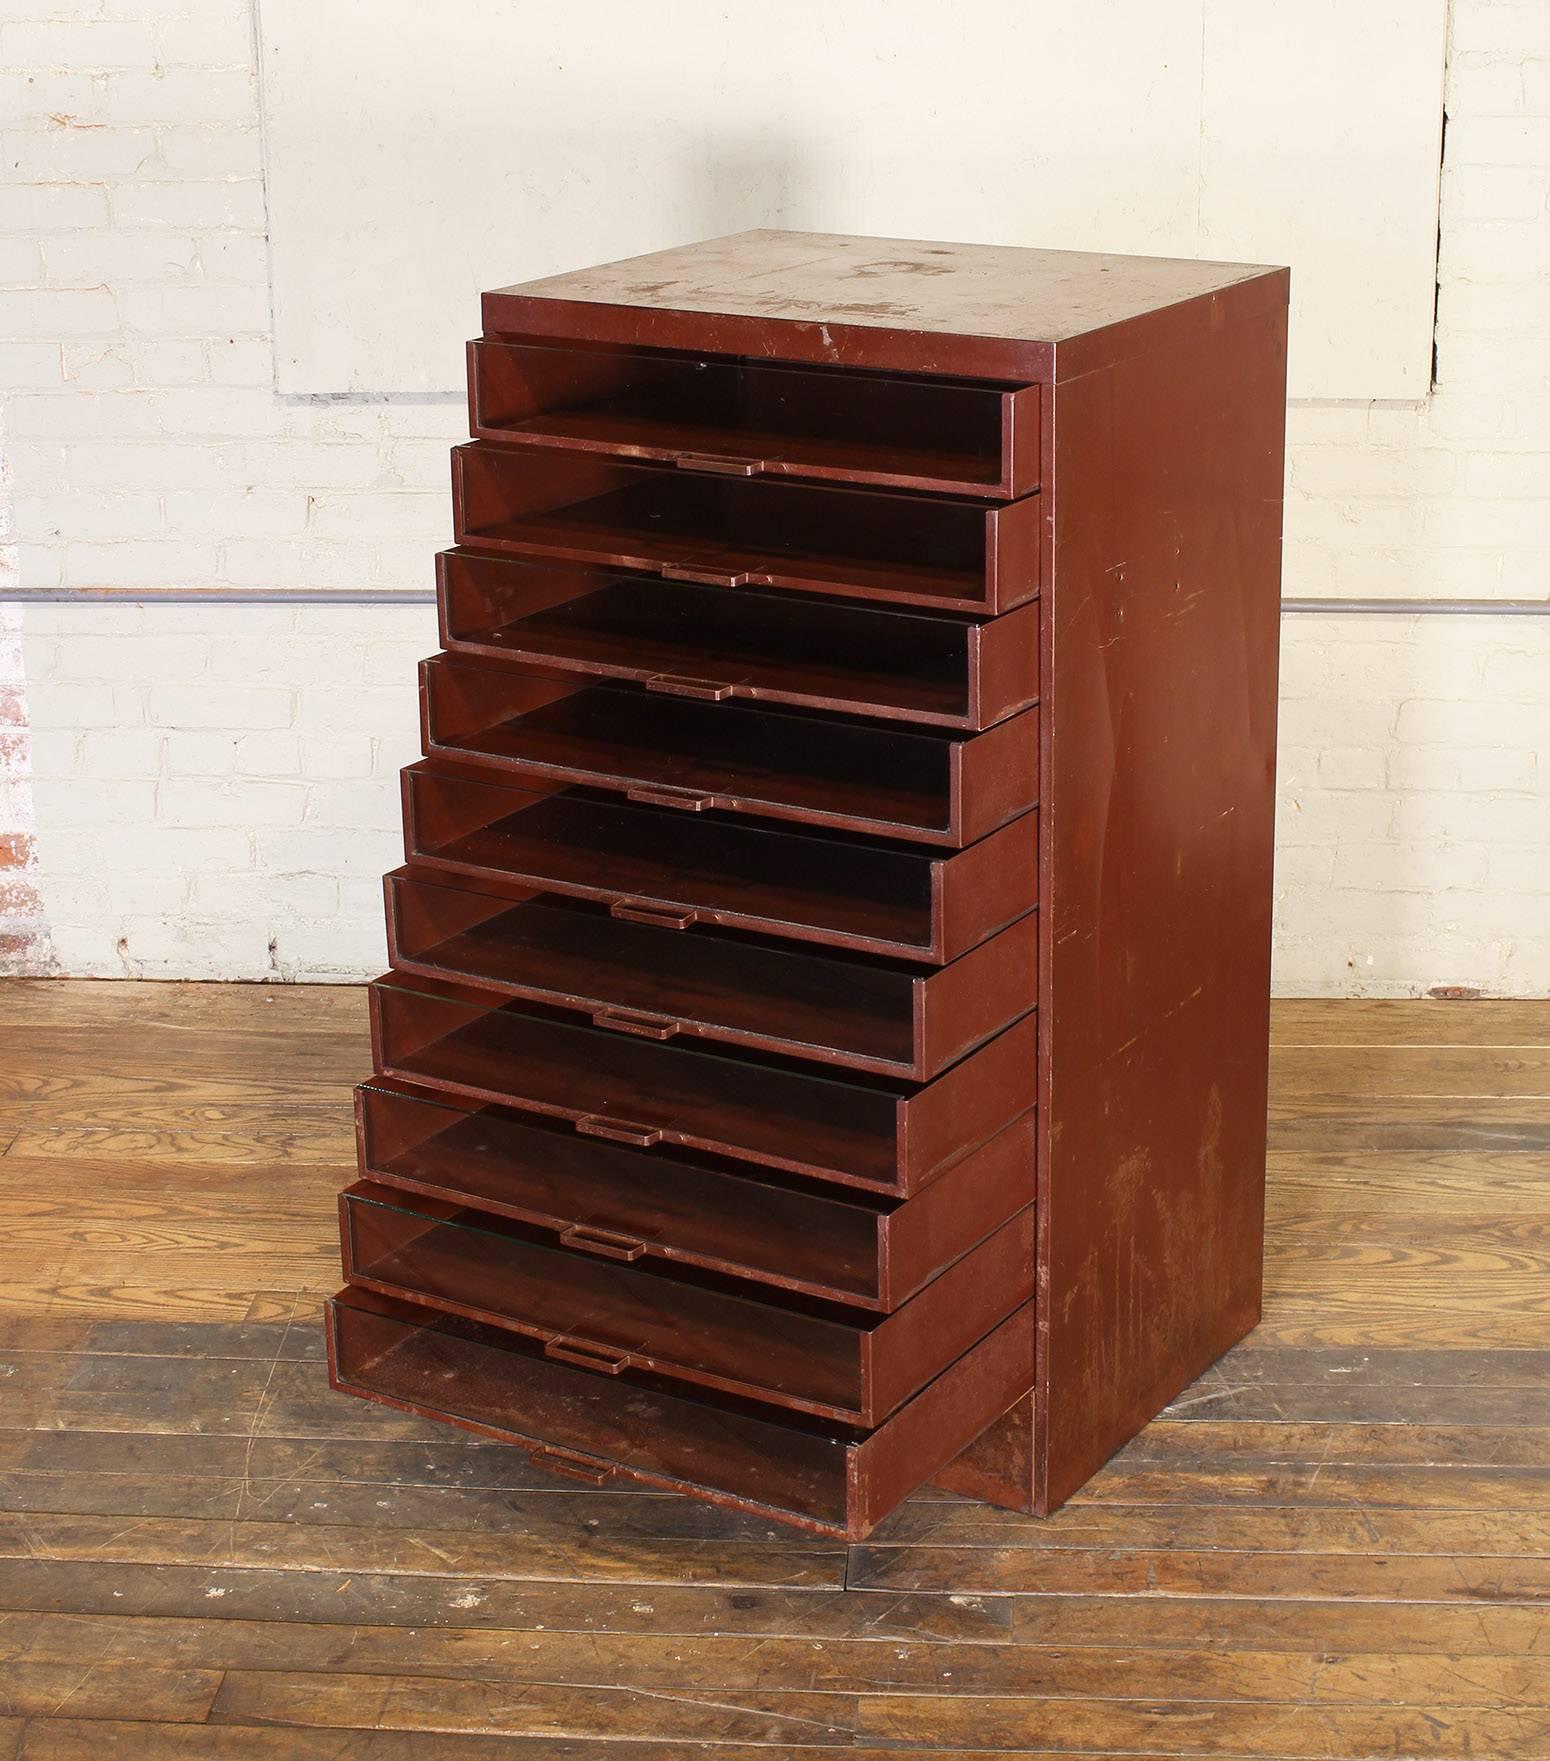 American Vintage Industrial Metal Storage Cabinet with Glass Drawers